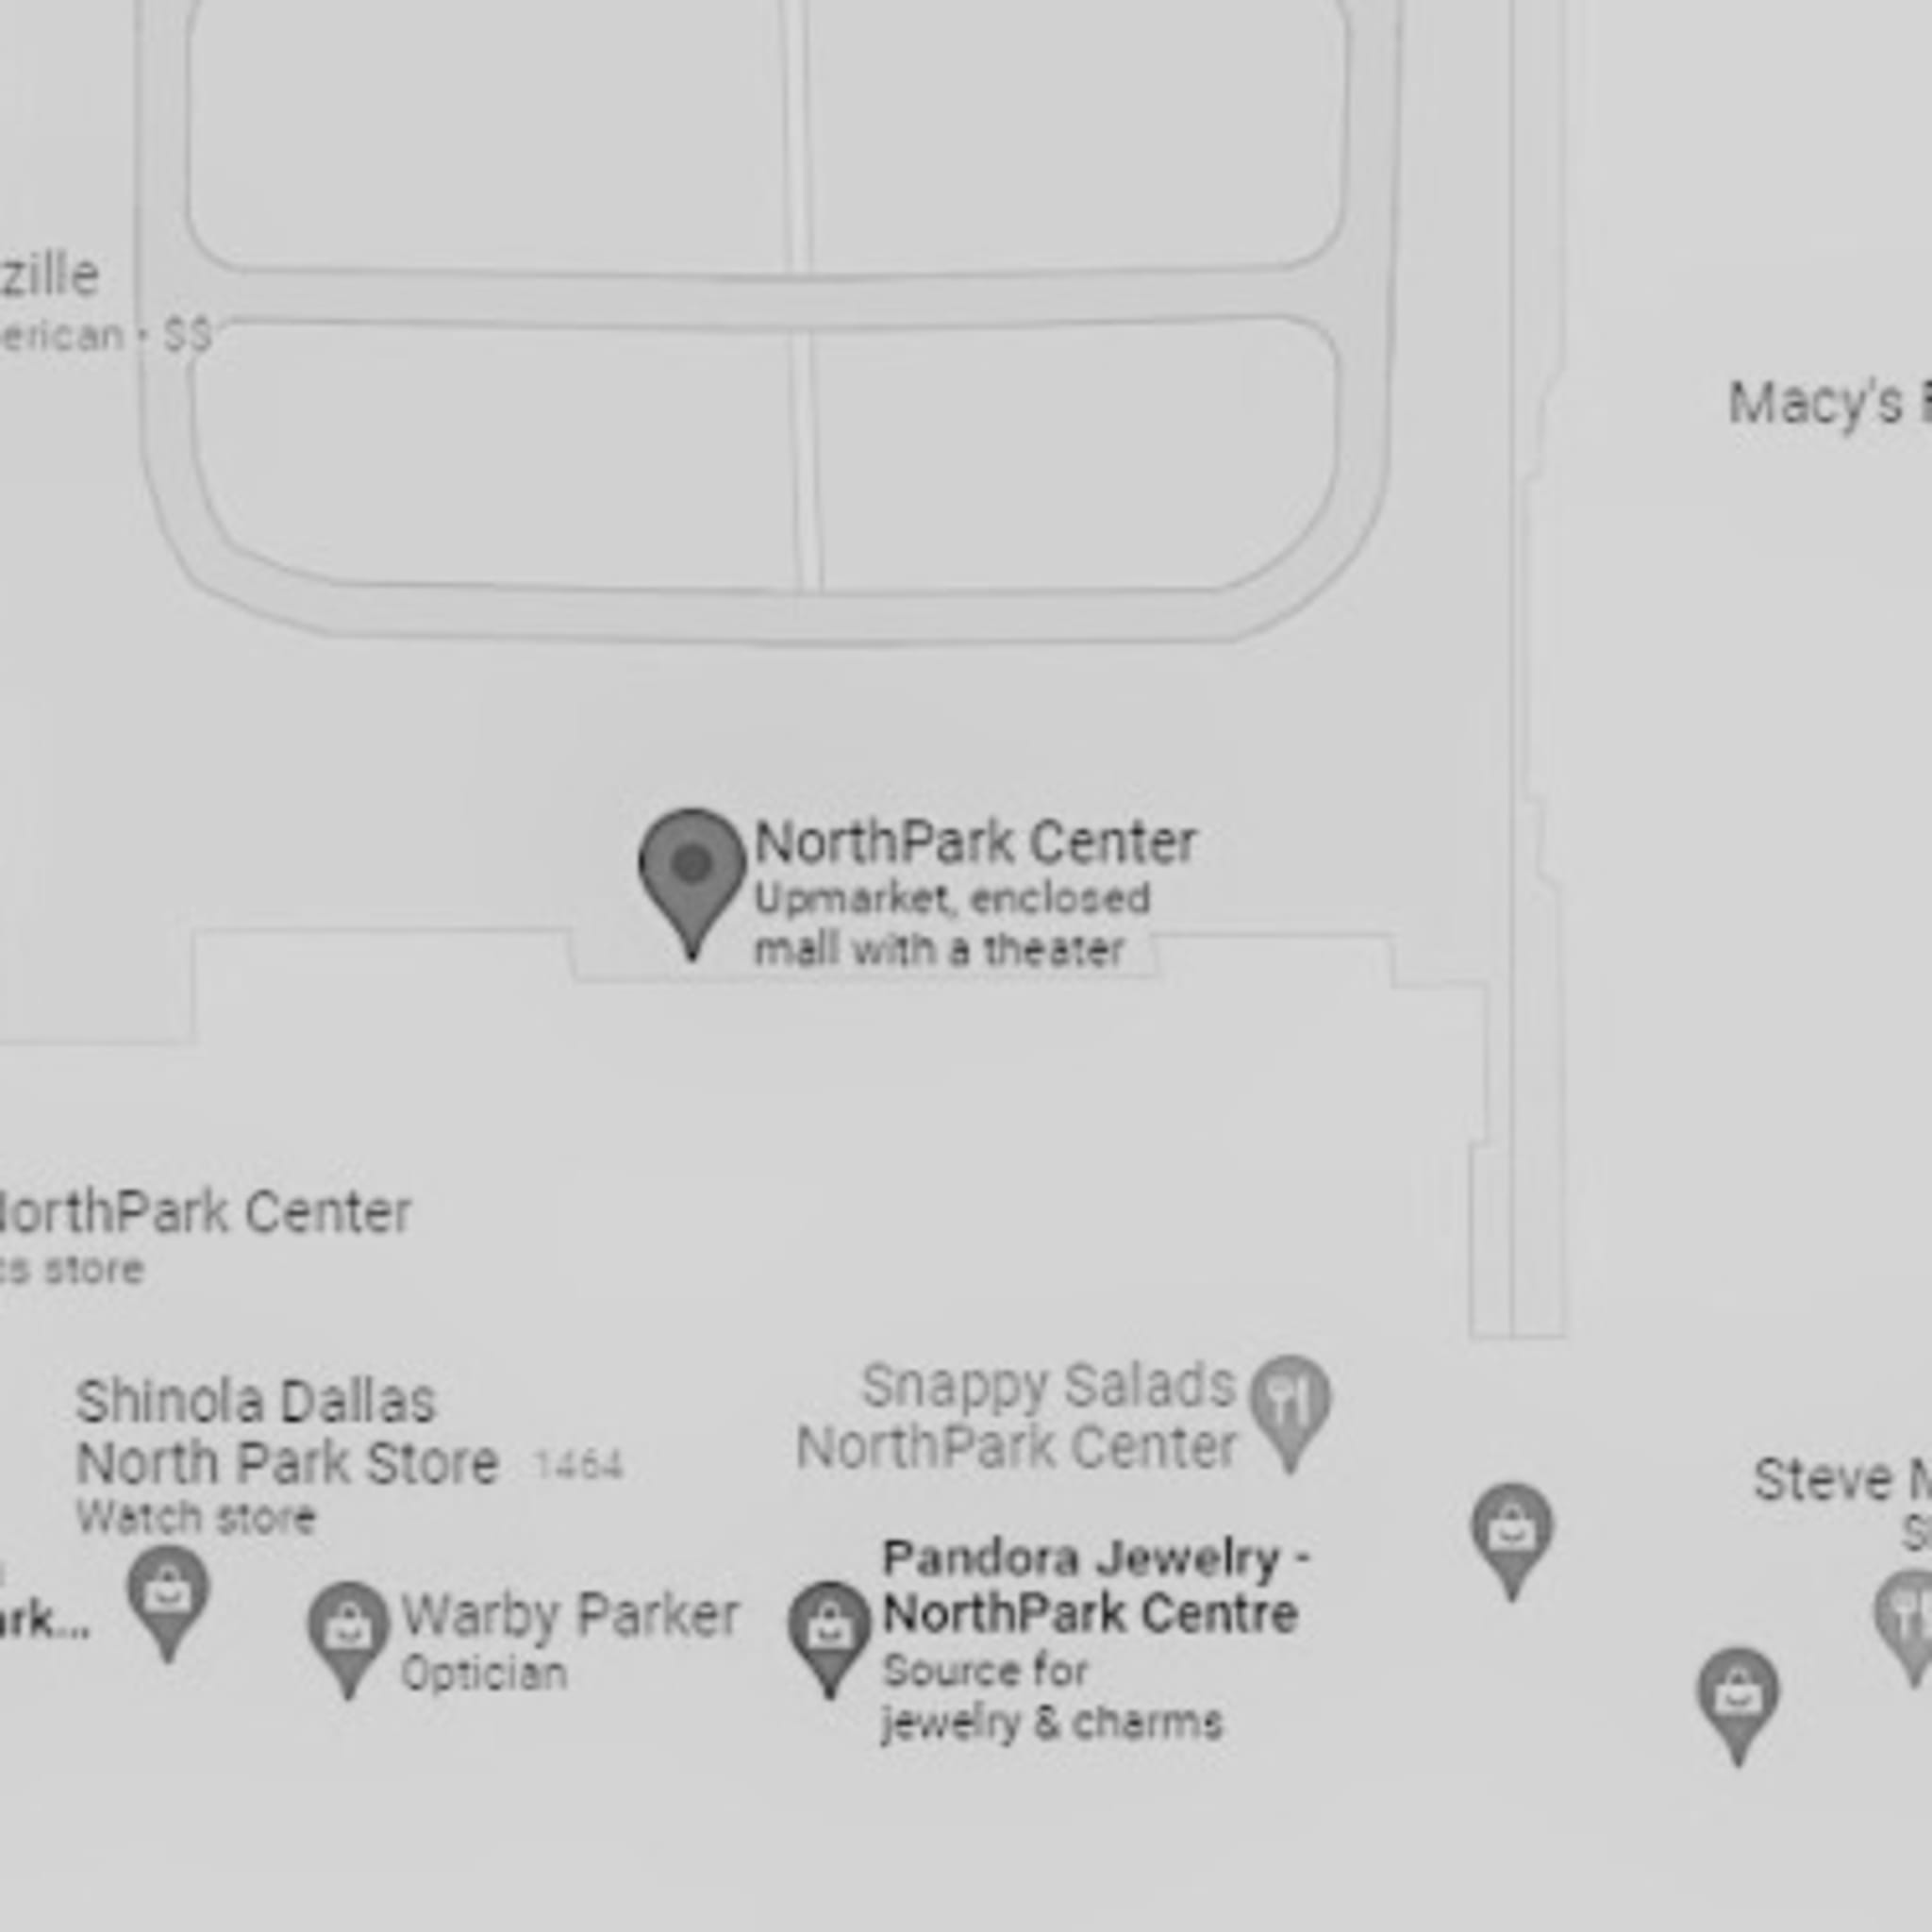 Louis Vuitton Dallas Northpark Mall, 8687 North Central Expressway